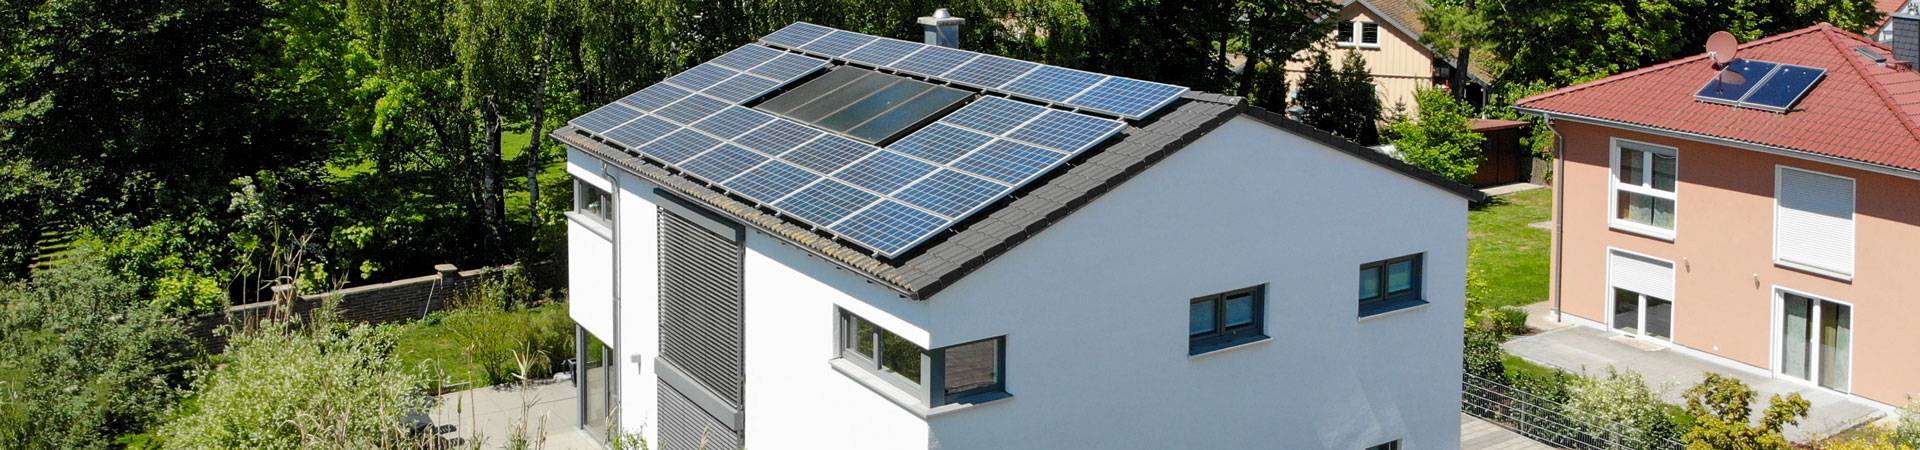 photovoltaik aschaffenburg